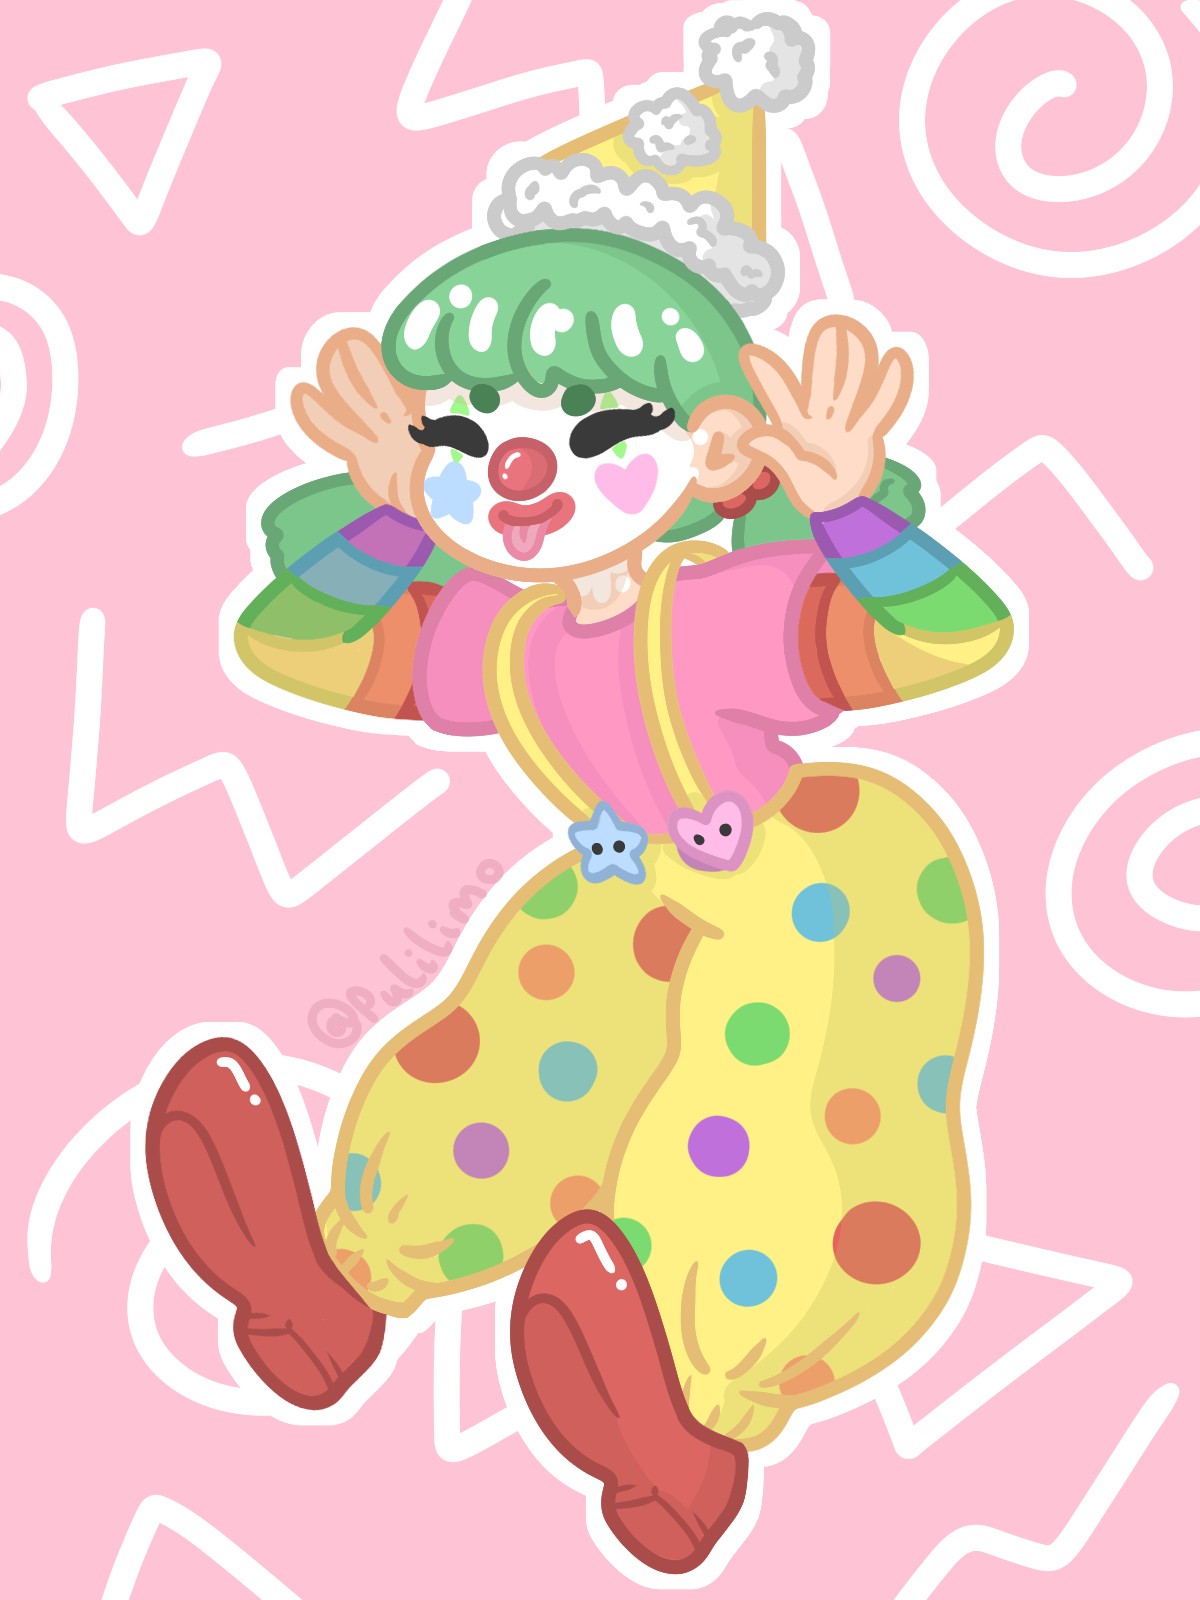 Clown OC! by Pulilimo on DeviantArt